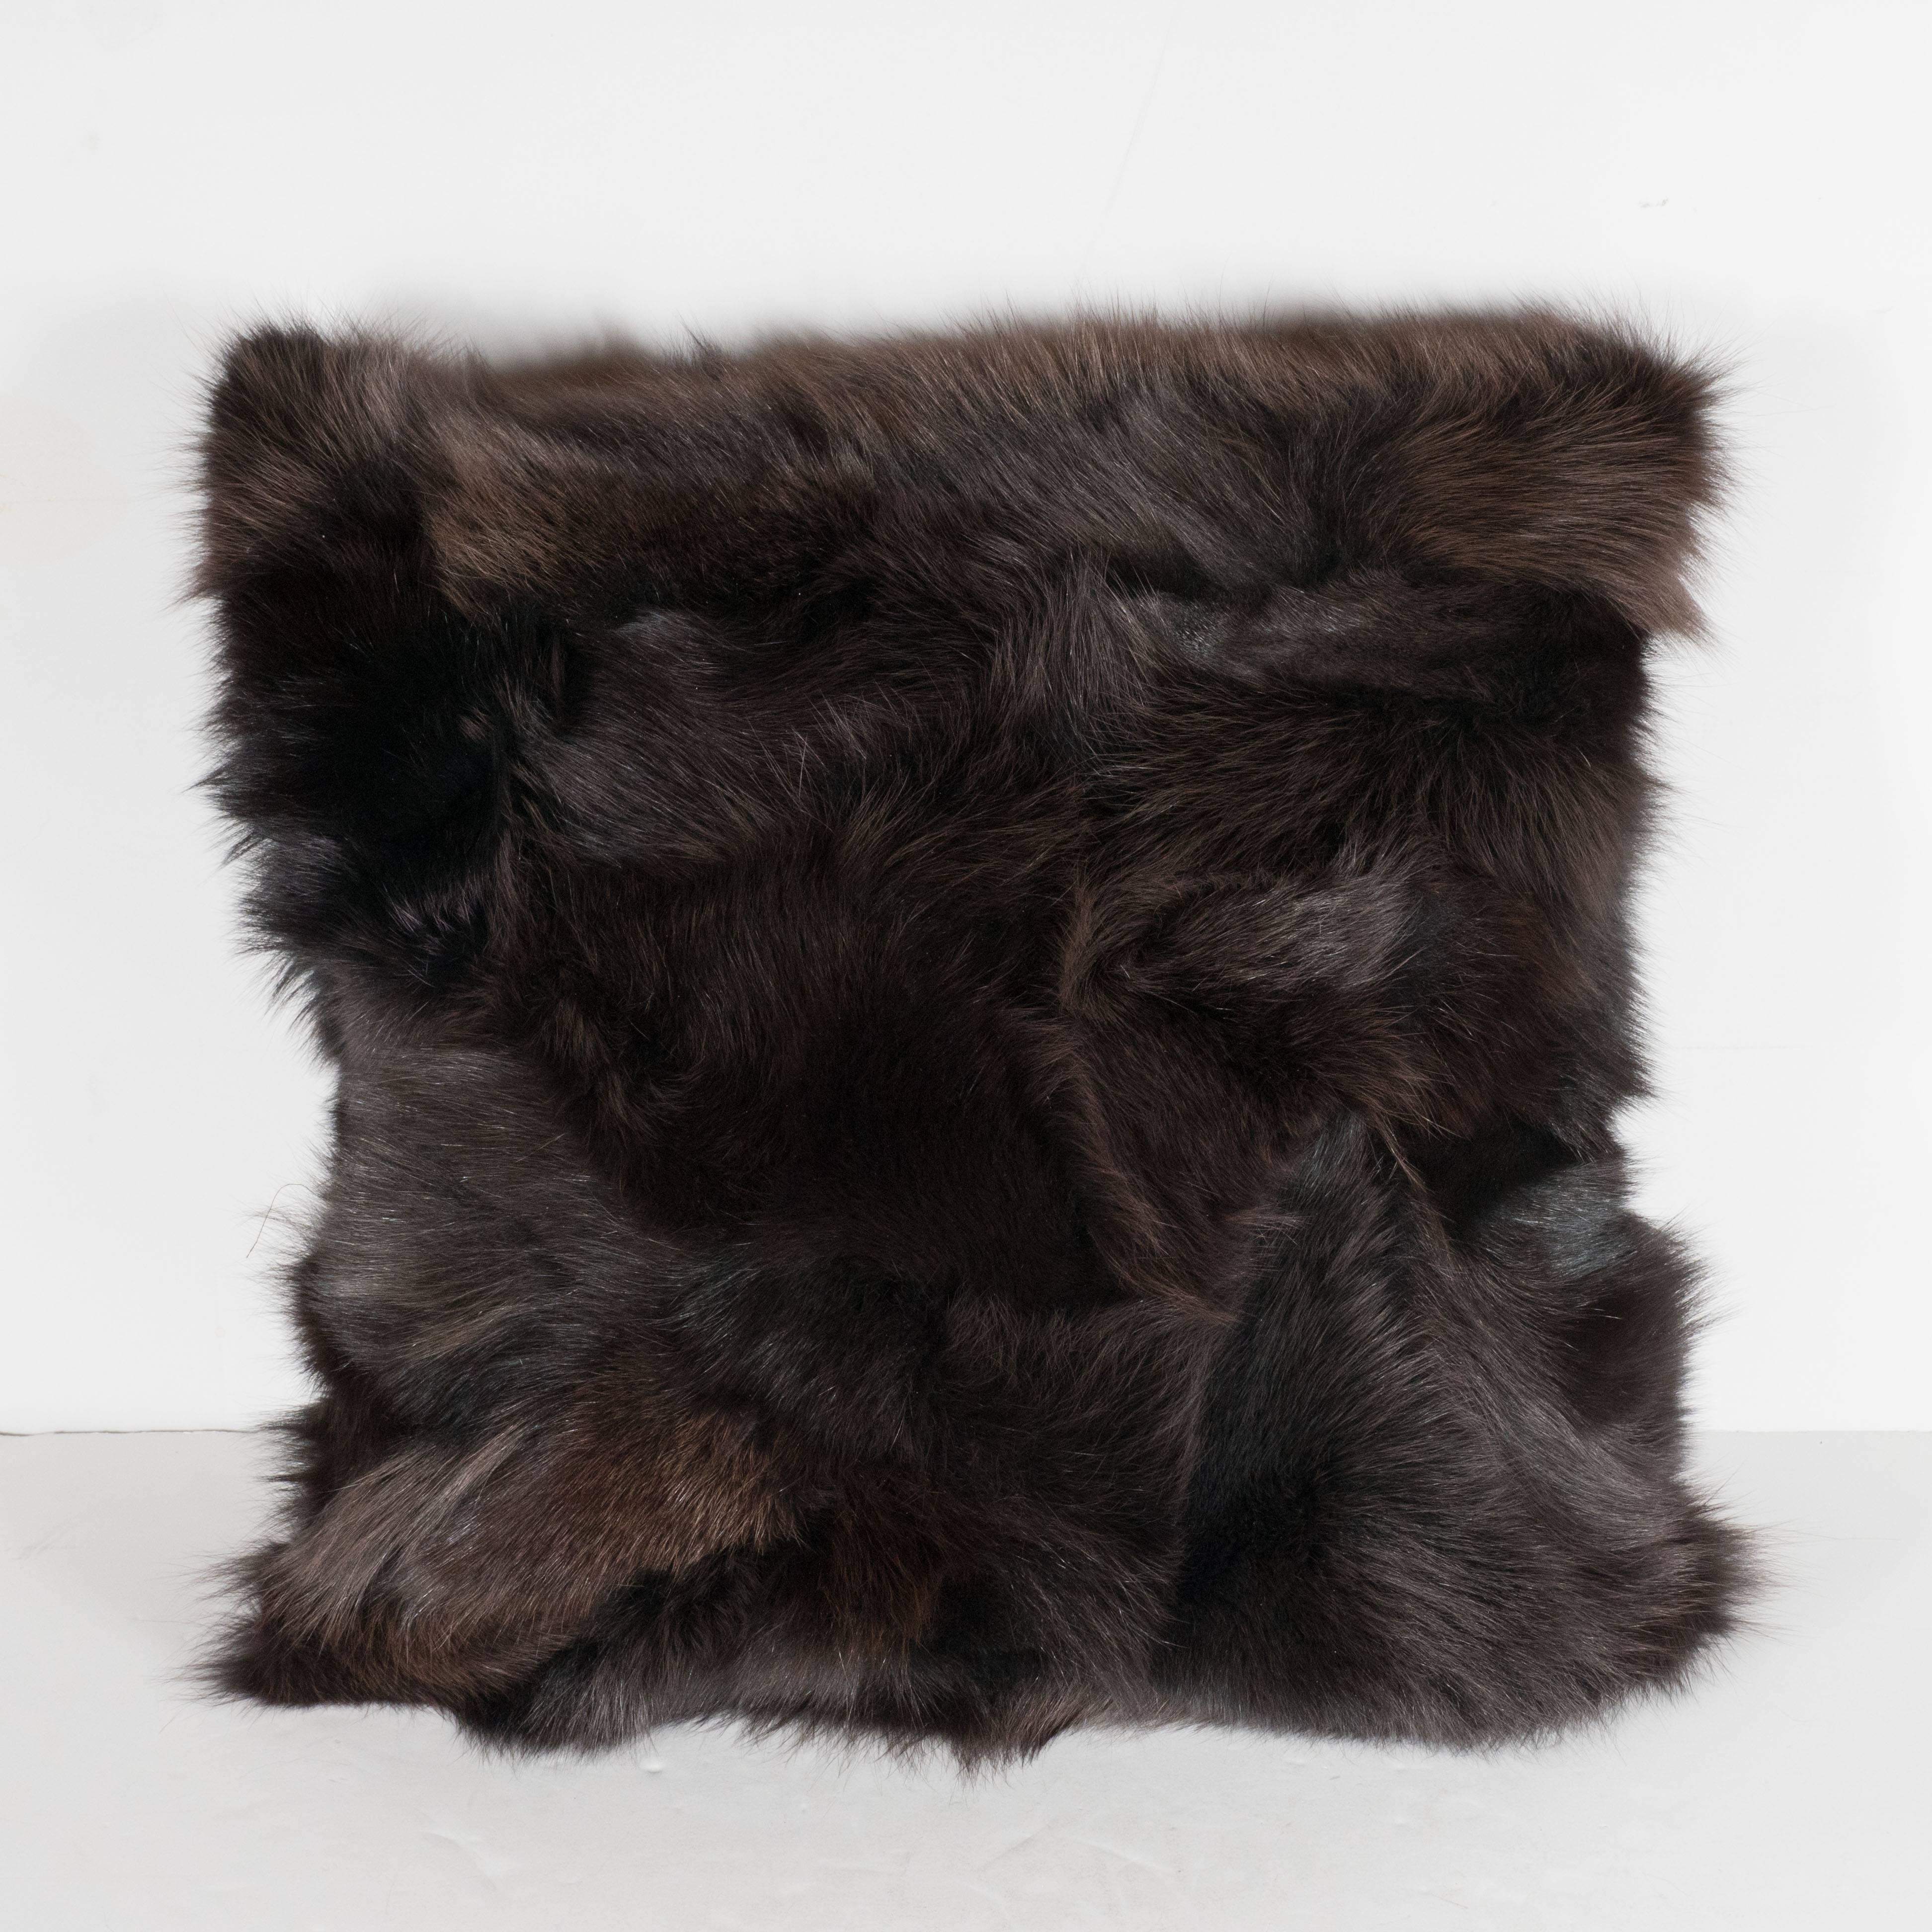 American Luxurious Custom New Handmade Fox Fur Pillows in a Stunning Onyx Shade For Sale